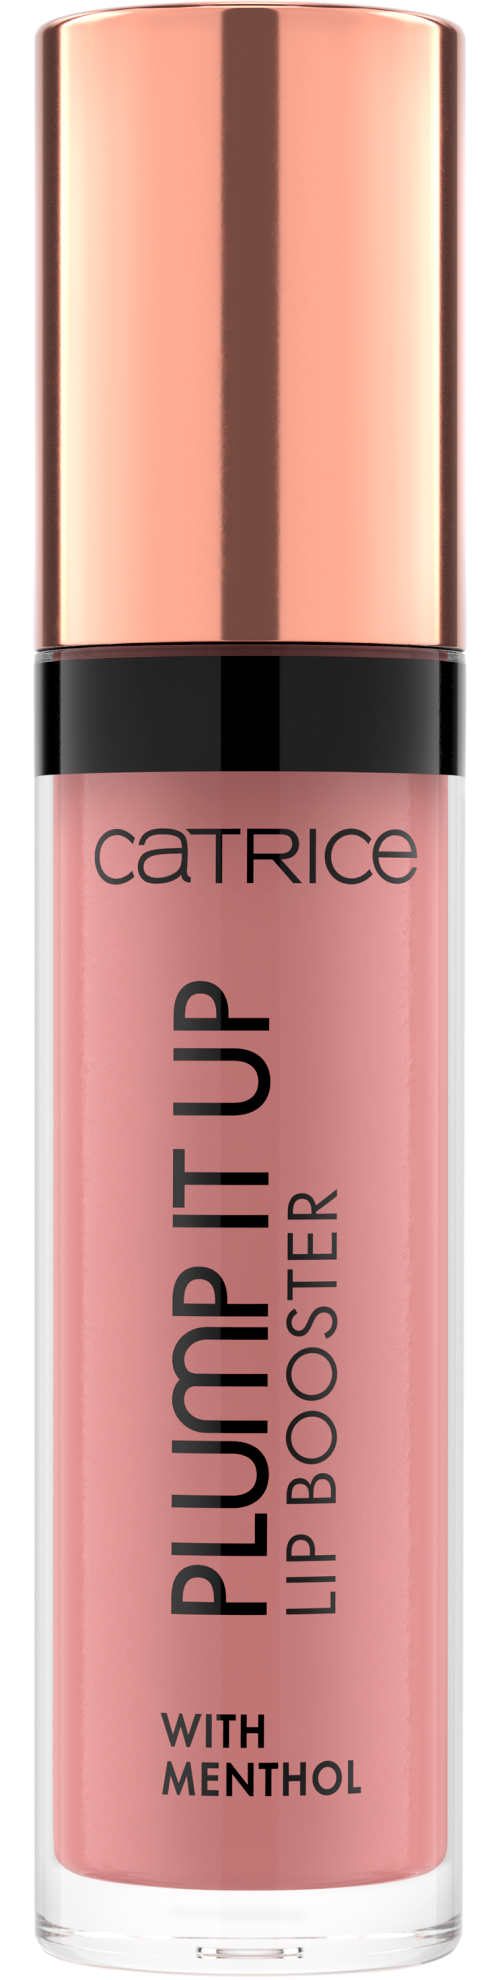 Catrice Lippenstift-Set »The Nude Lip PRO Set«, (Set, 3 tlg.)